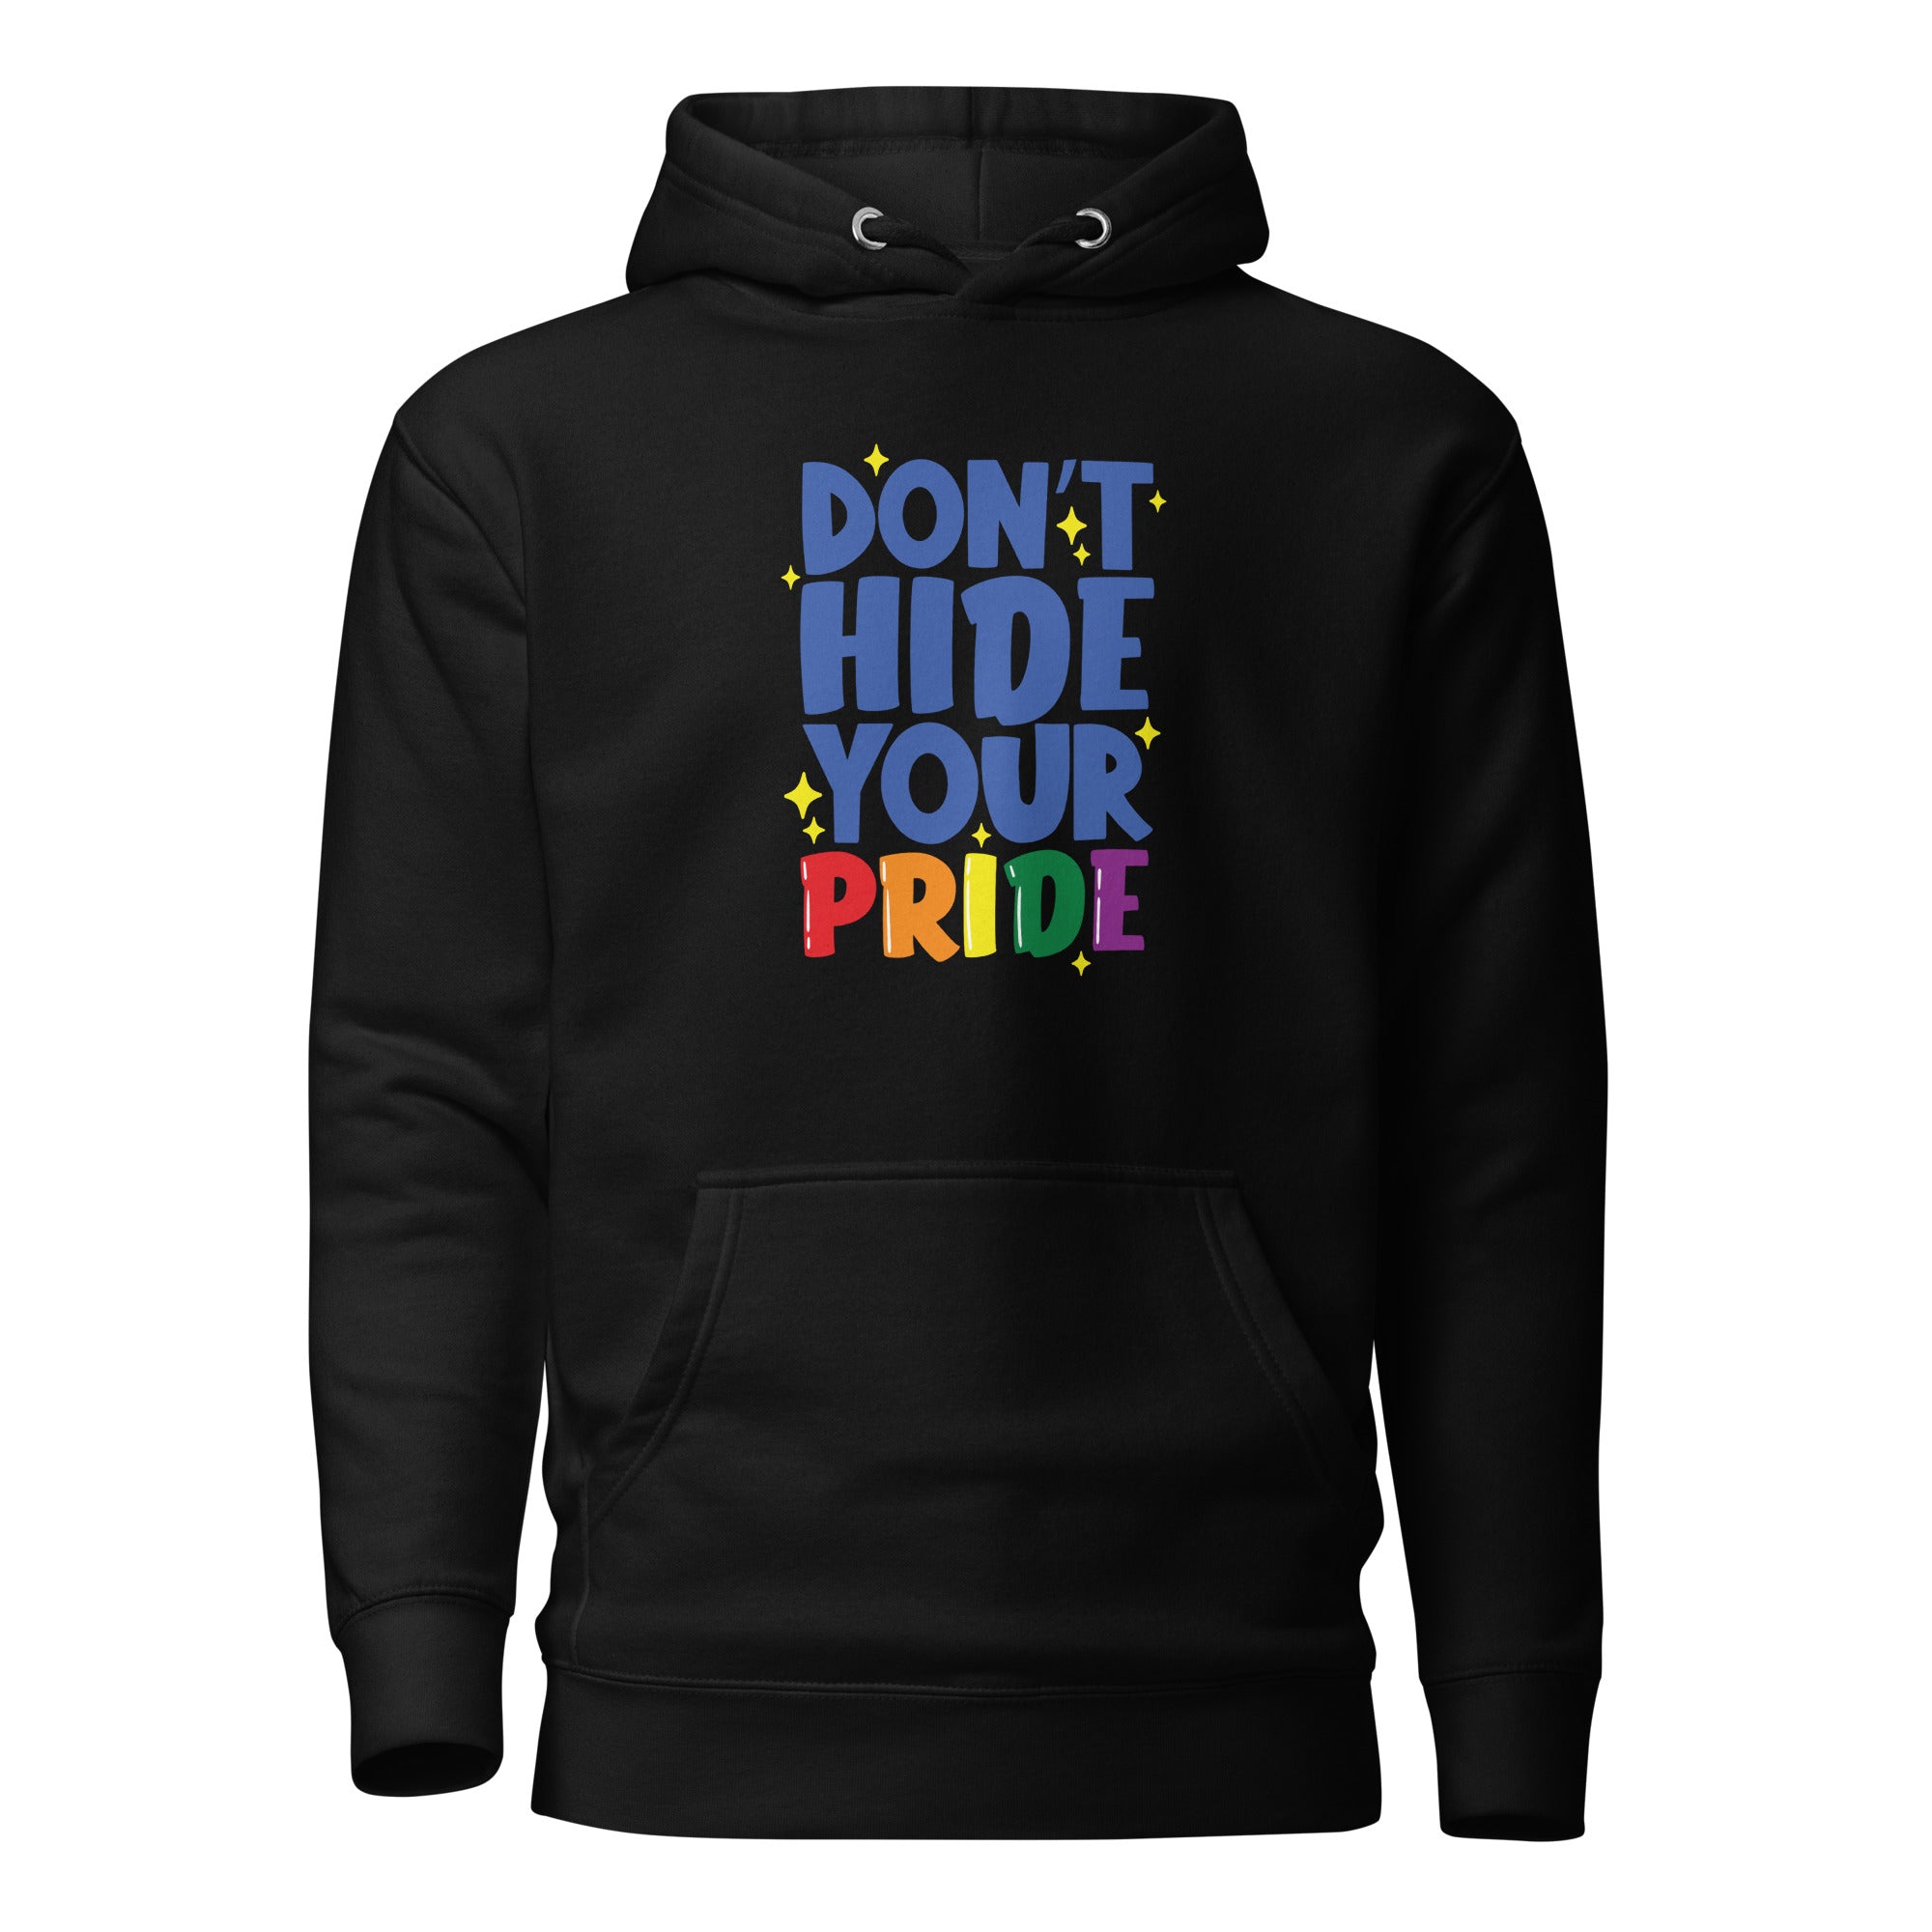 Unisex Hoodie- Don't hide your pride